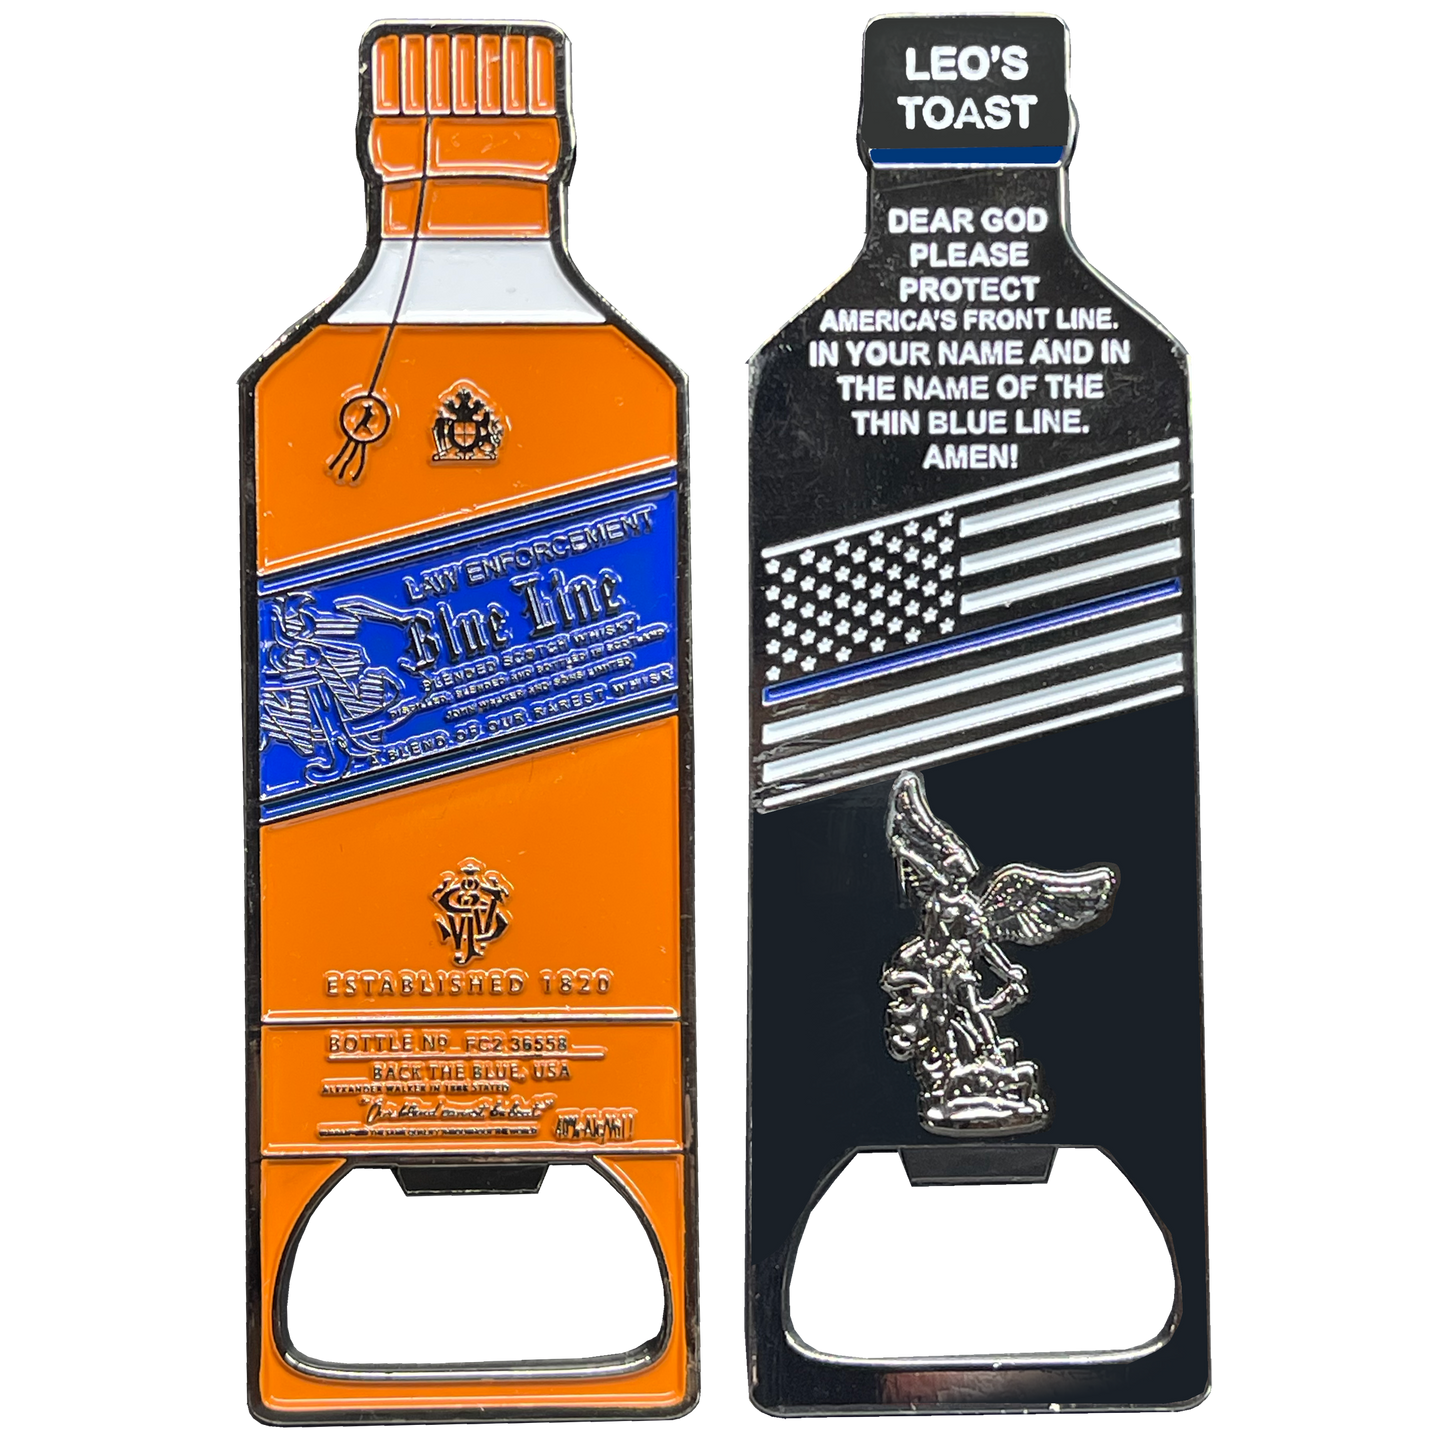 BL16-001 Blue Label Police Officer LEO's Toast Thin Blue Line Prayer Challenge Coin Bottle Opener